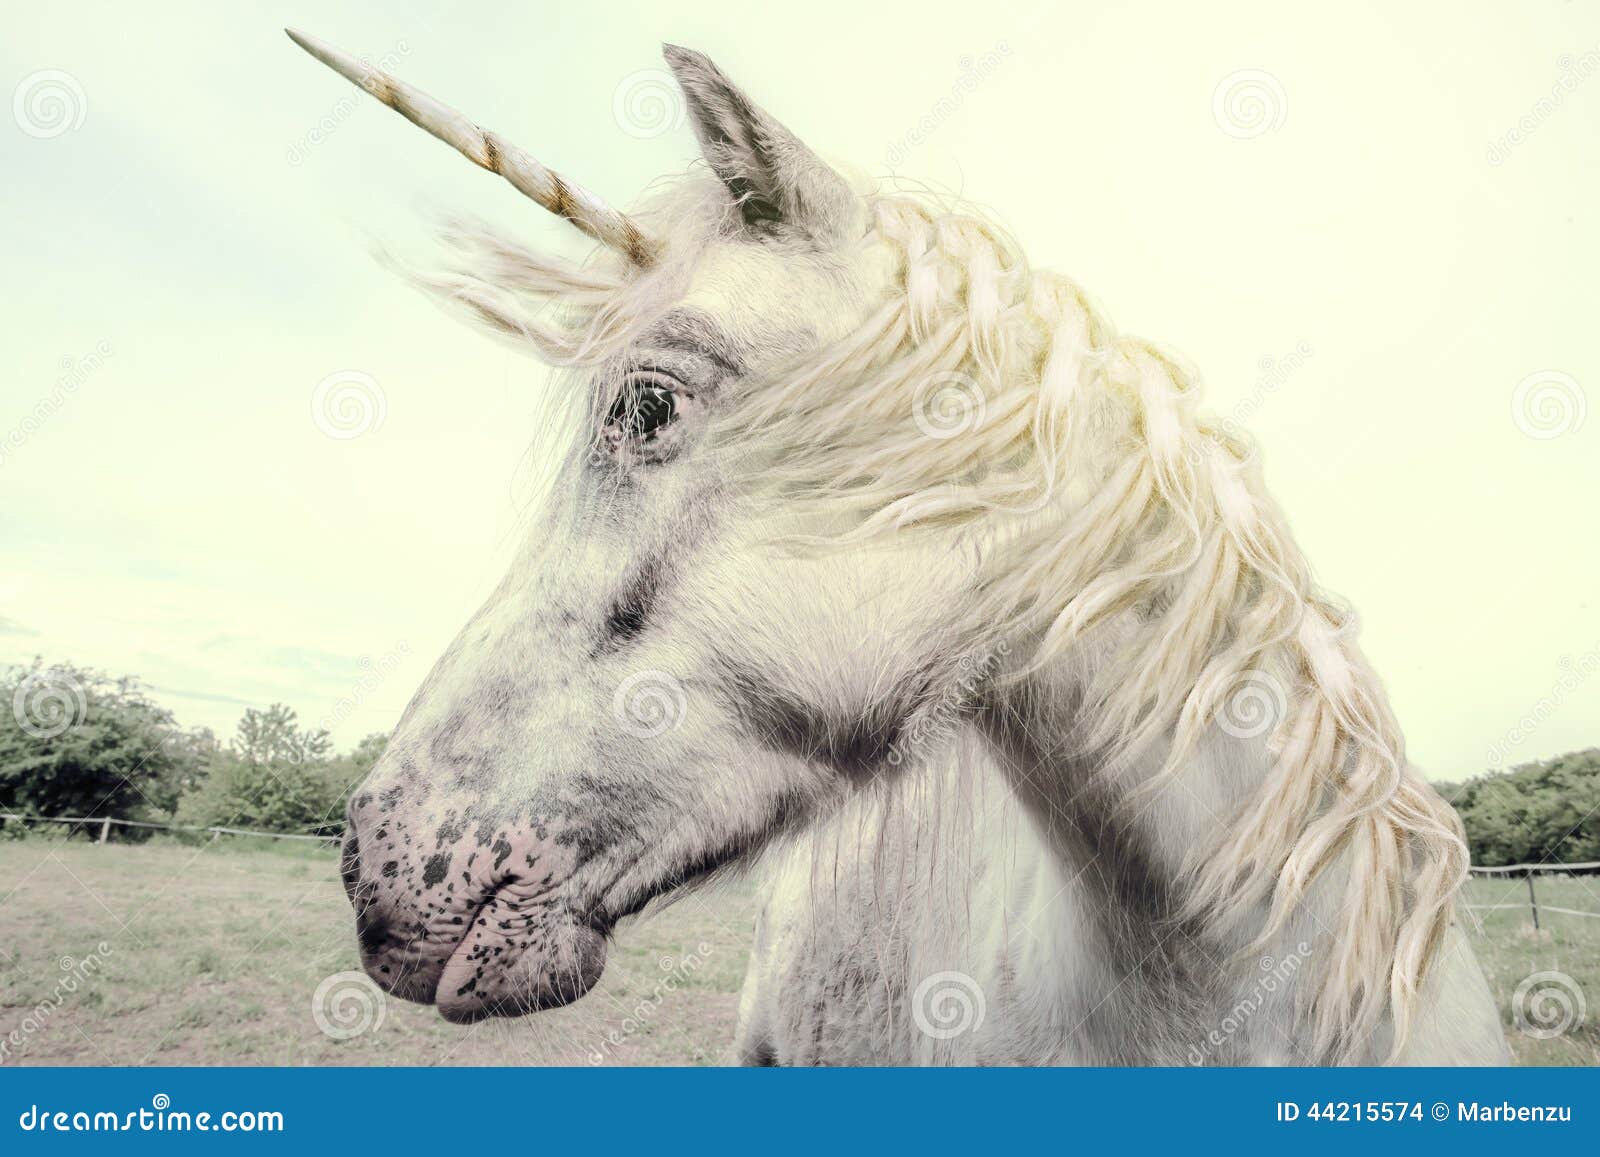 121 Realistic Unicorn Stock Photos - Free & Royalty-Free Stock ...